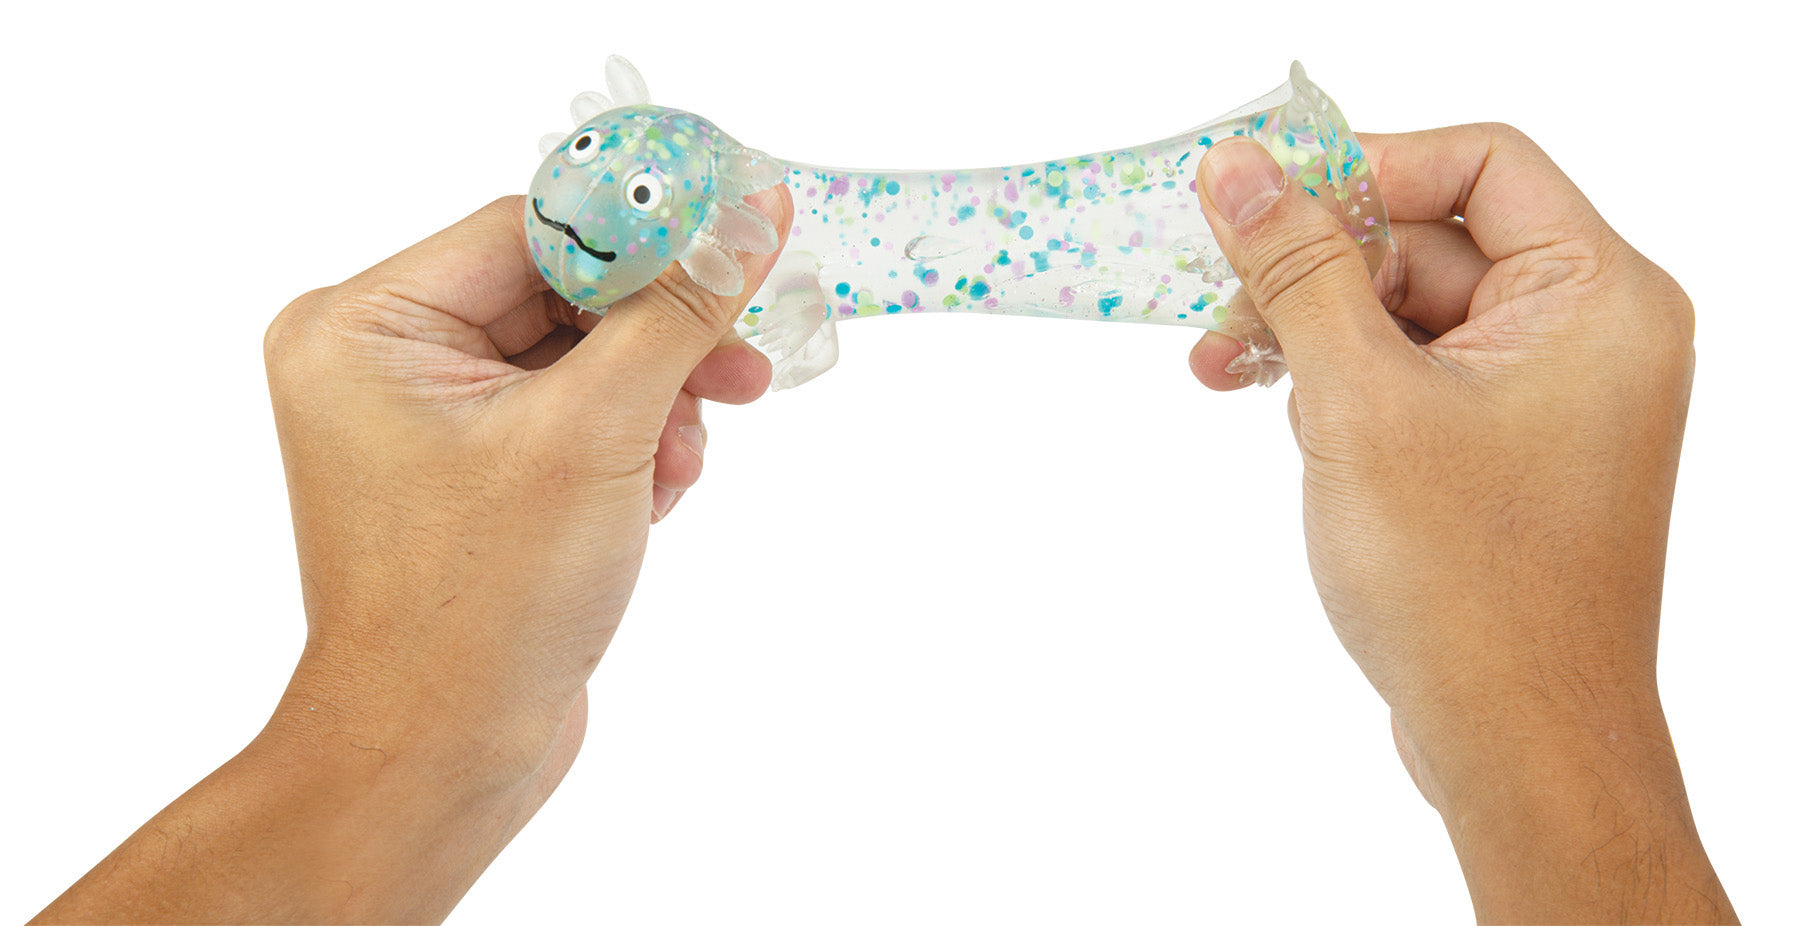 Gummiez Axolotl Super Fun Squish Toy – Assorted Colors - Sold Individually